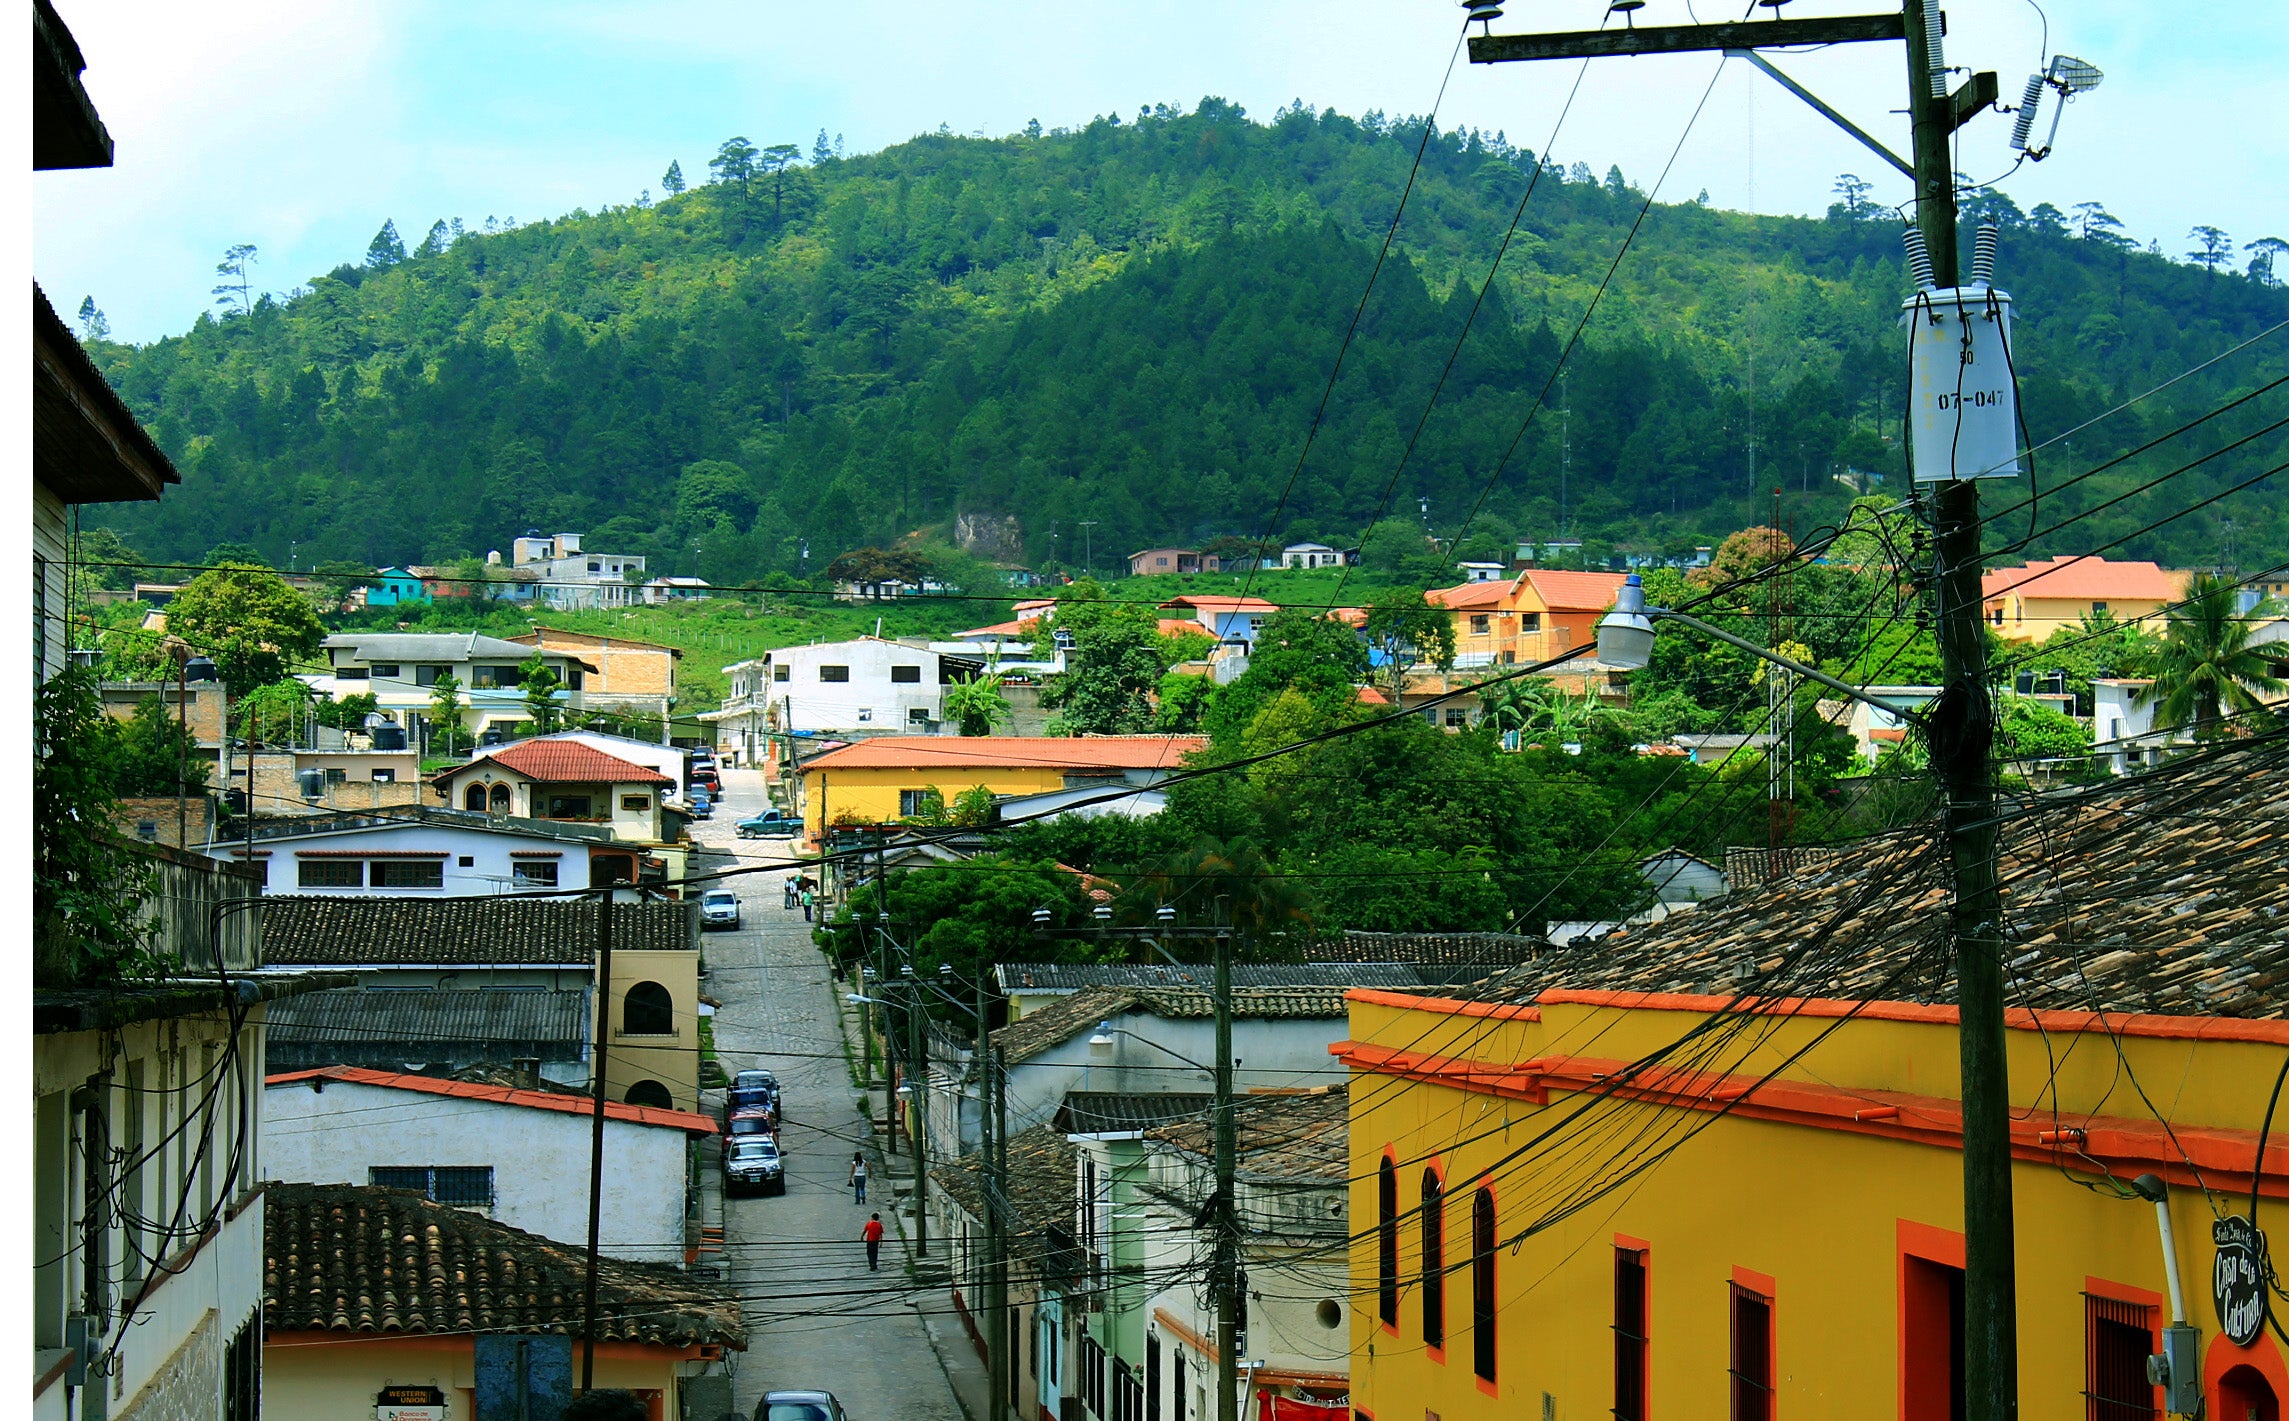 Santa Rosa de Copán